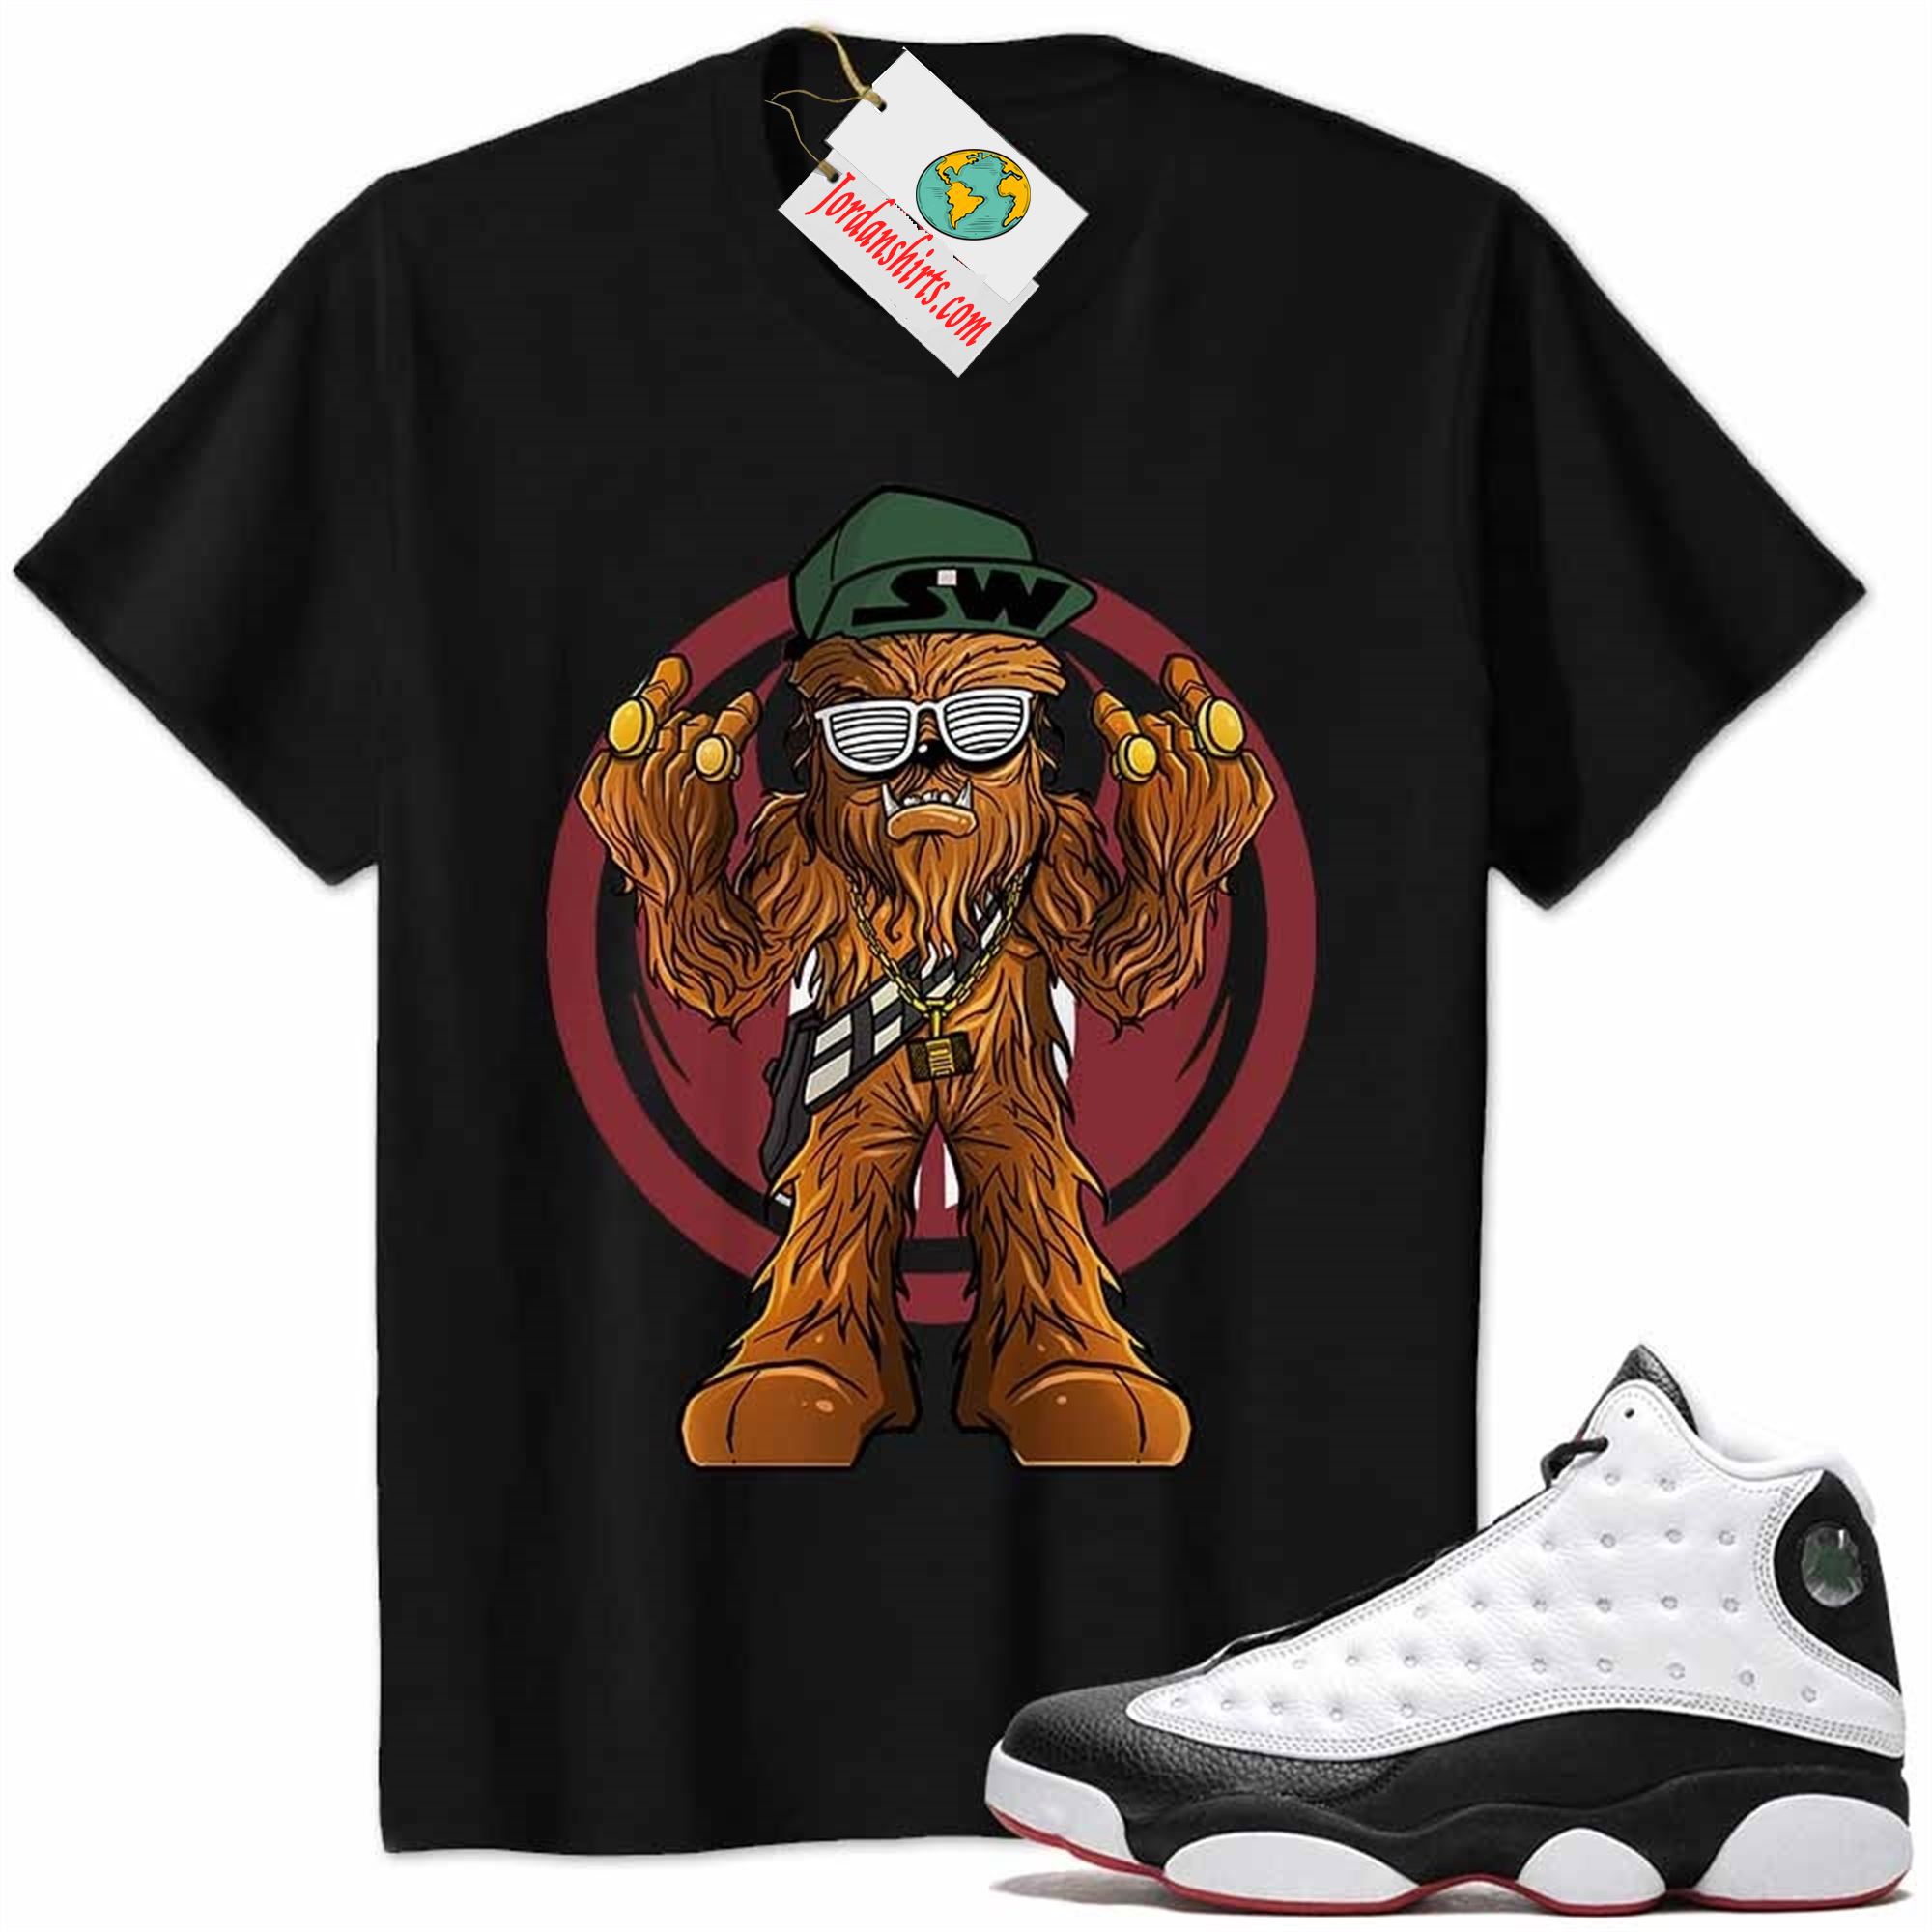 Jordan 13 Shirt, Gangster Chewbacca Stars War Black Air Jordan 13 He Got Game 13s Plus Size Up To 5xl